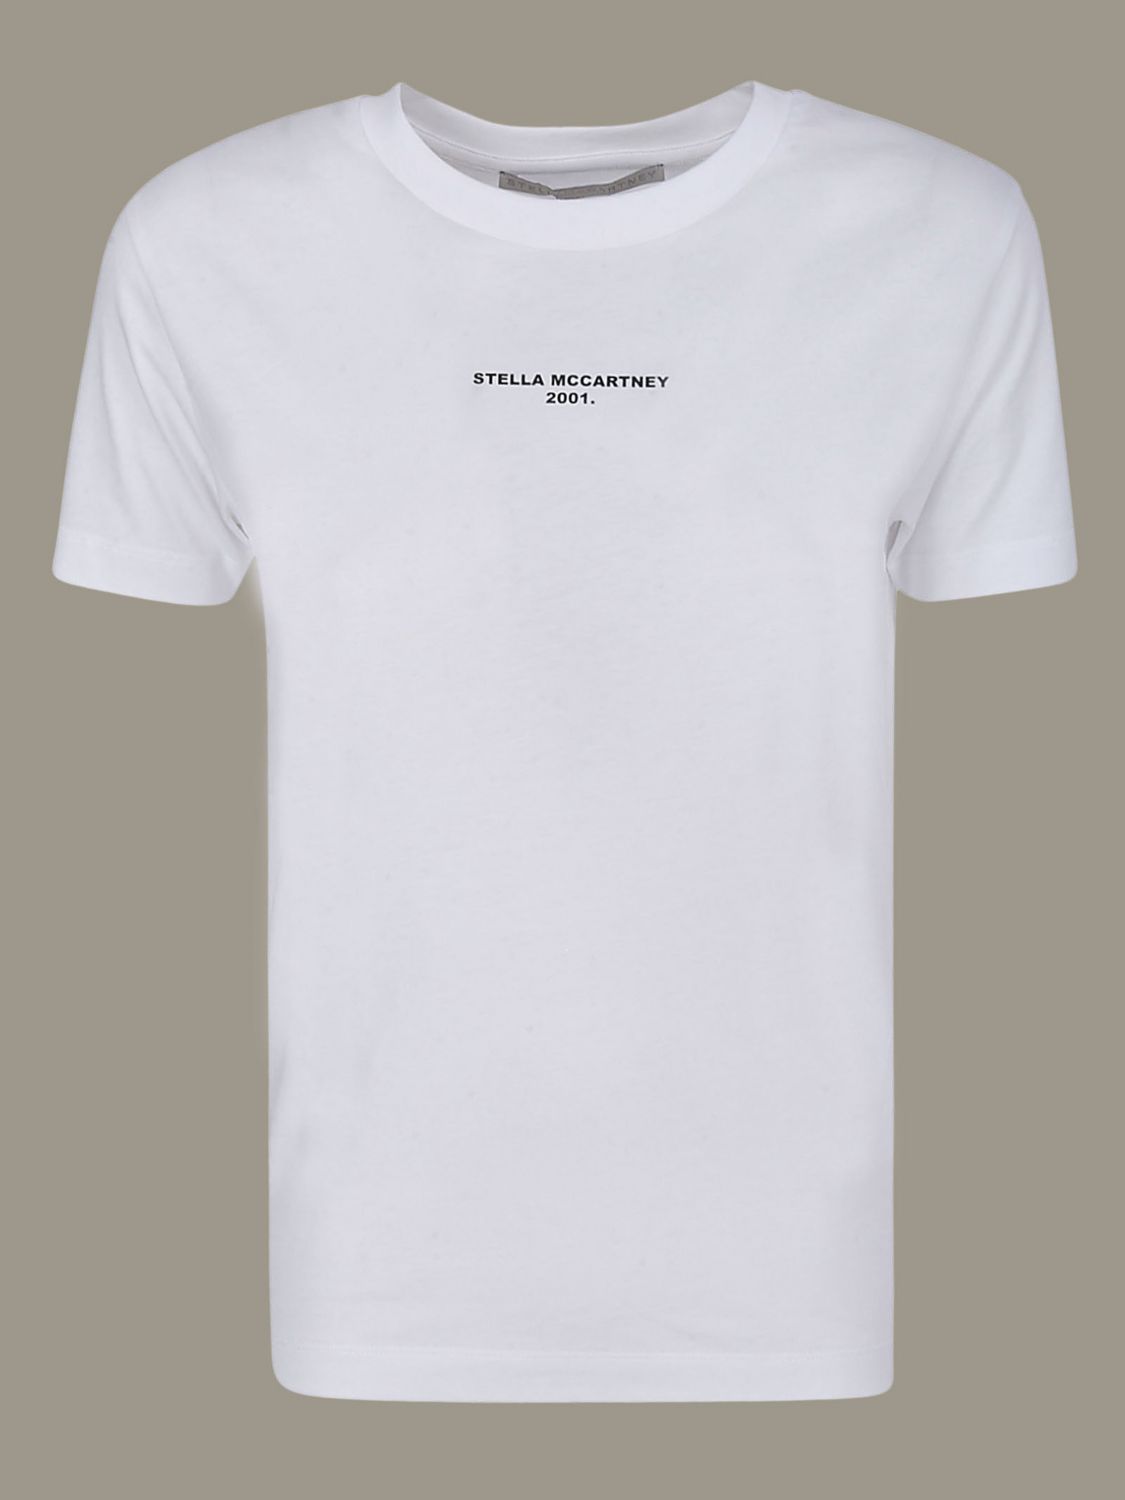 STELLA MCCARTNEY Outlet: t-shirt with logo - White | STELLA MCCARTNEY t ...